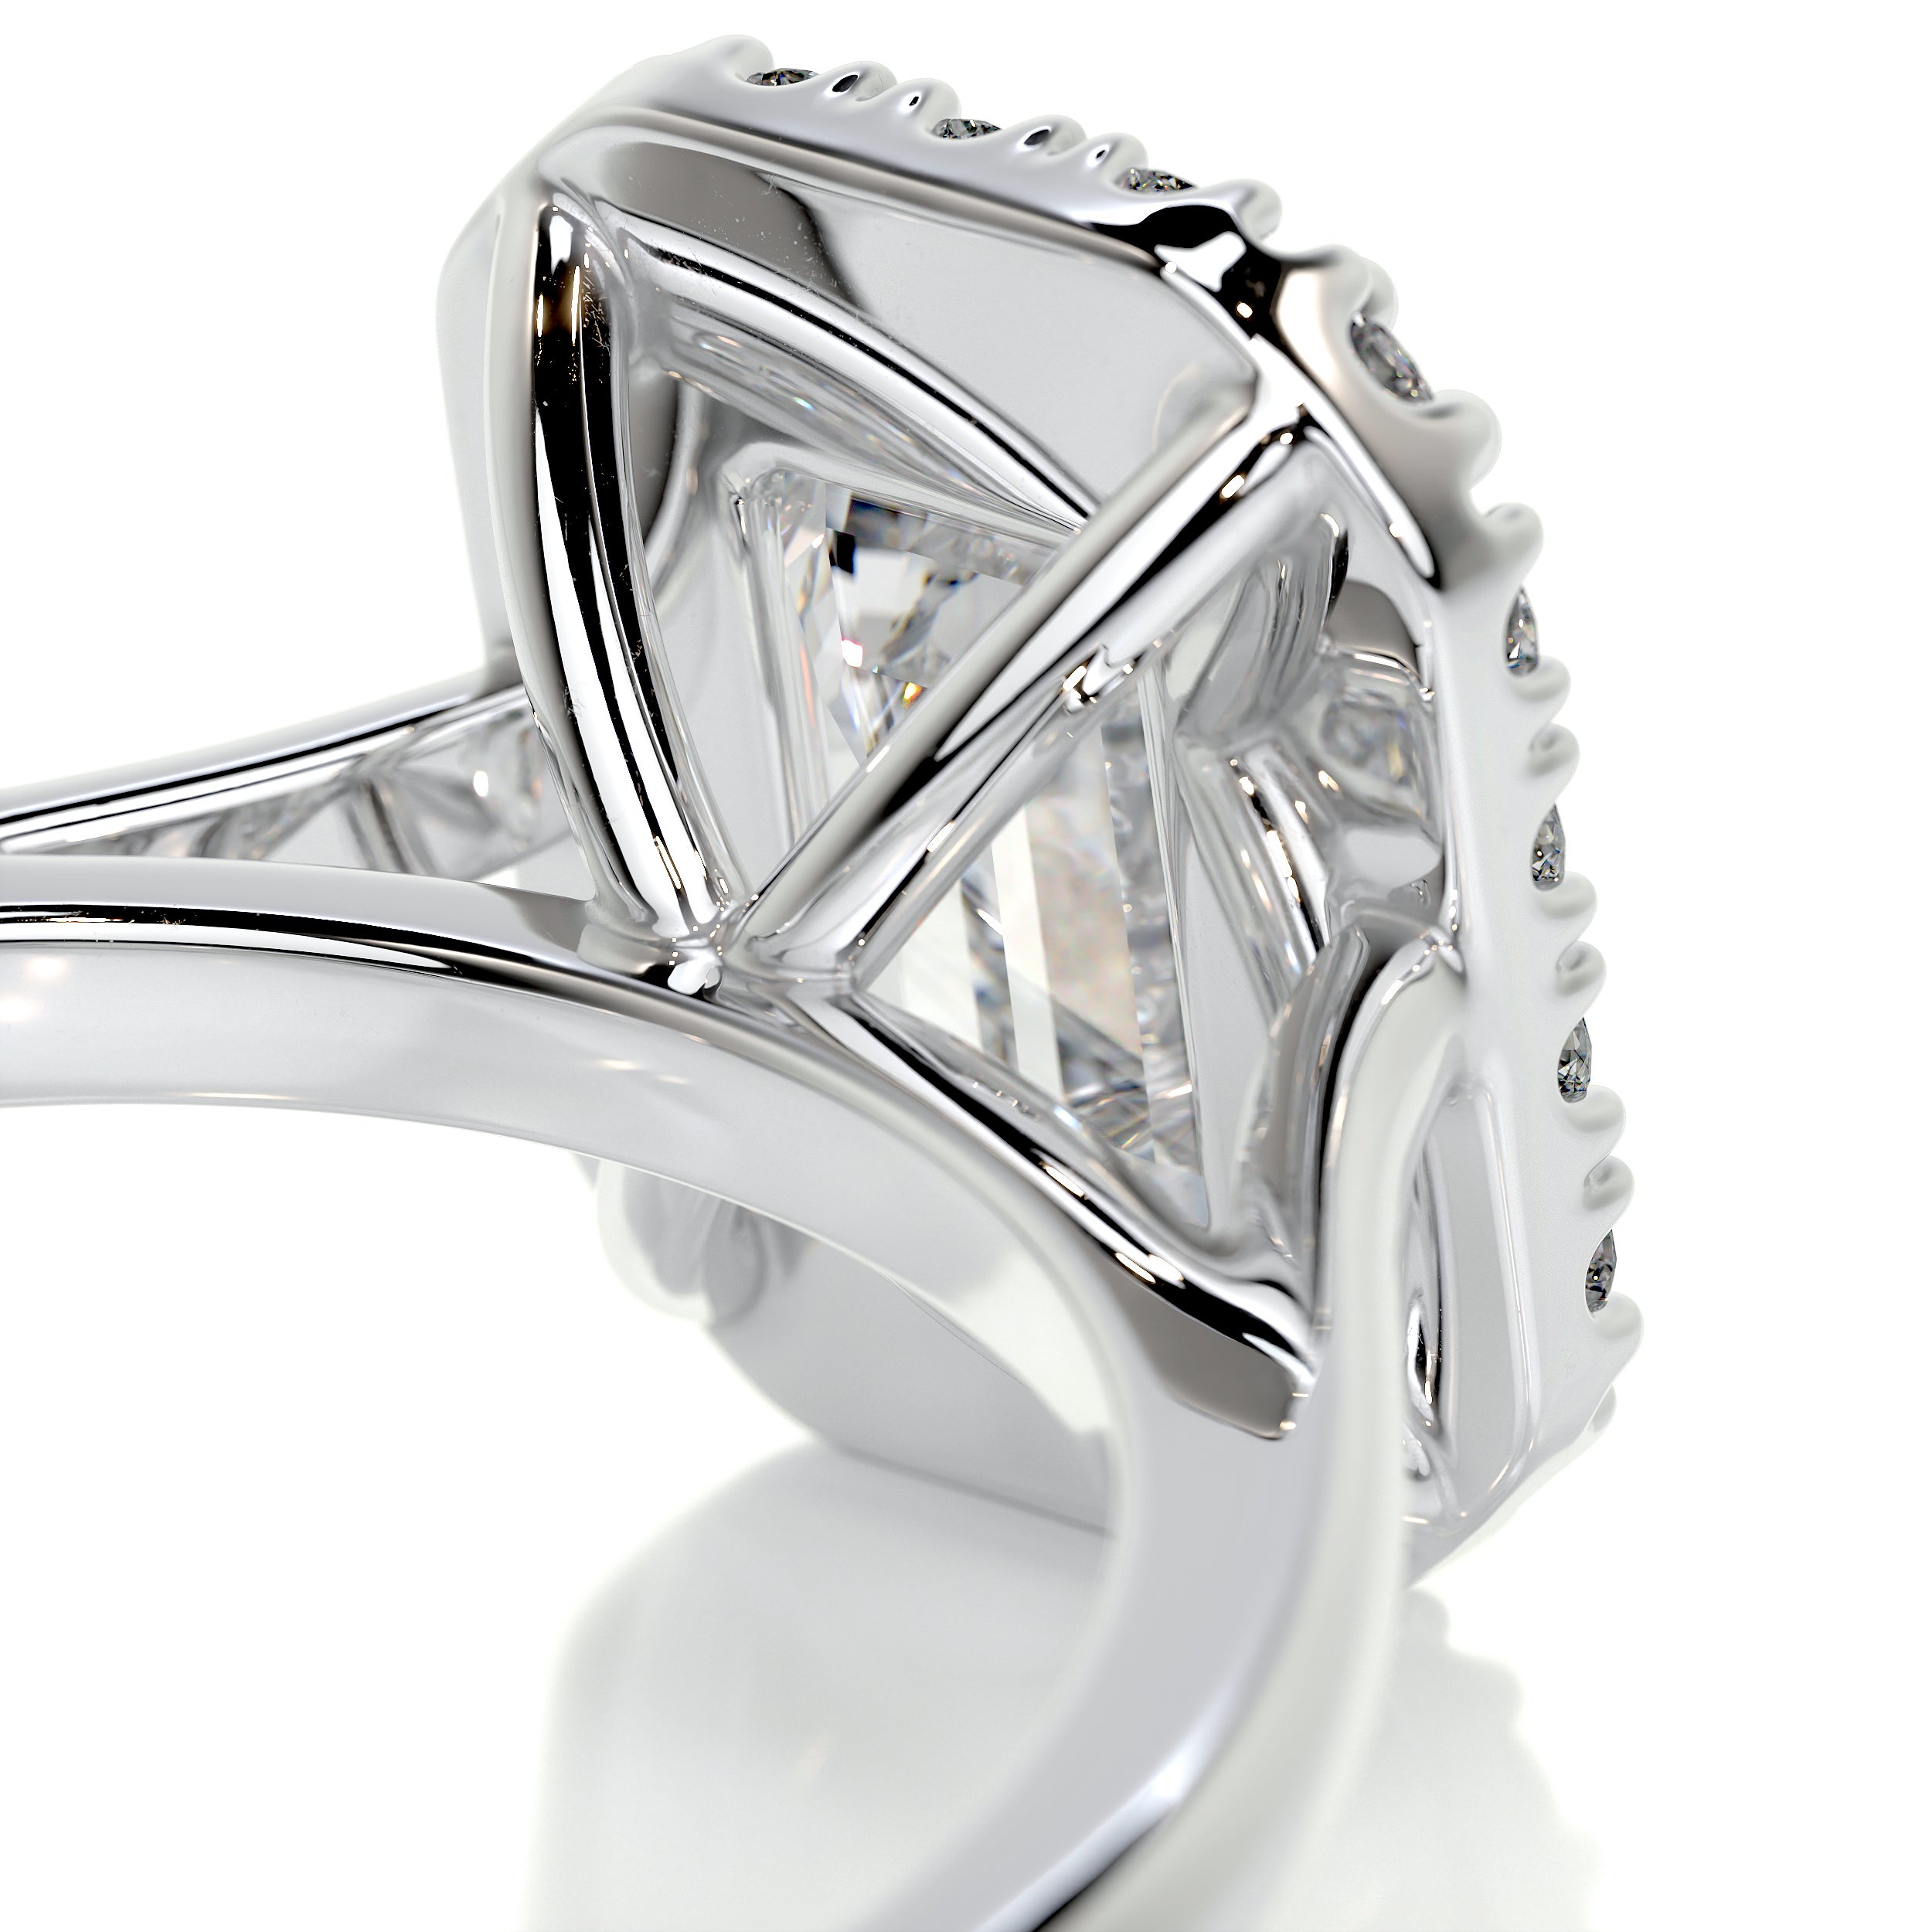 Vanessa Diamond Engagement Ring   (1.2 Carat) -14K White Gold